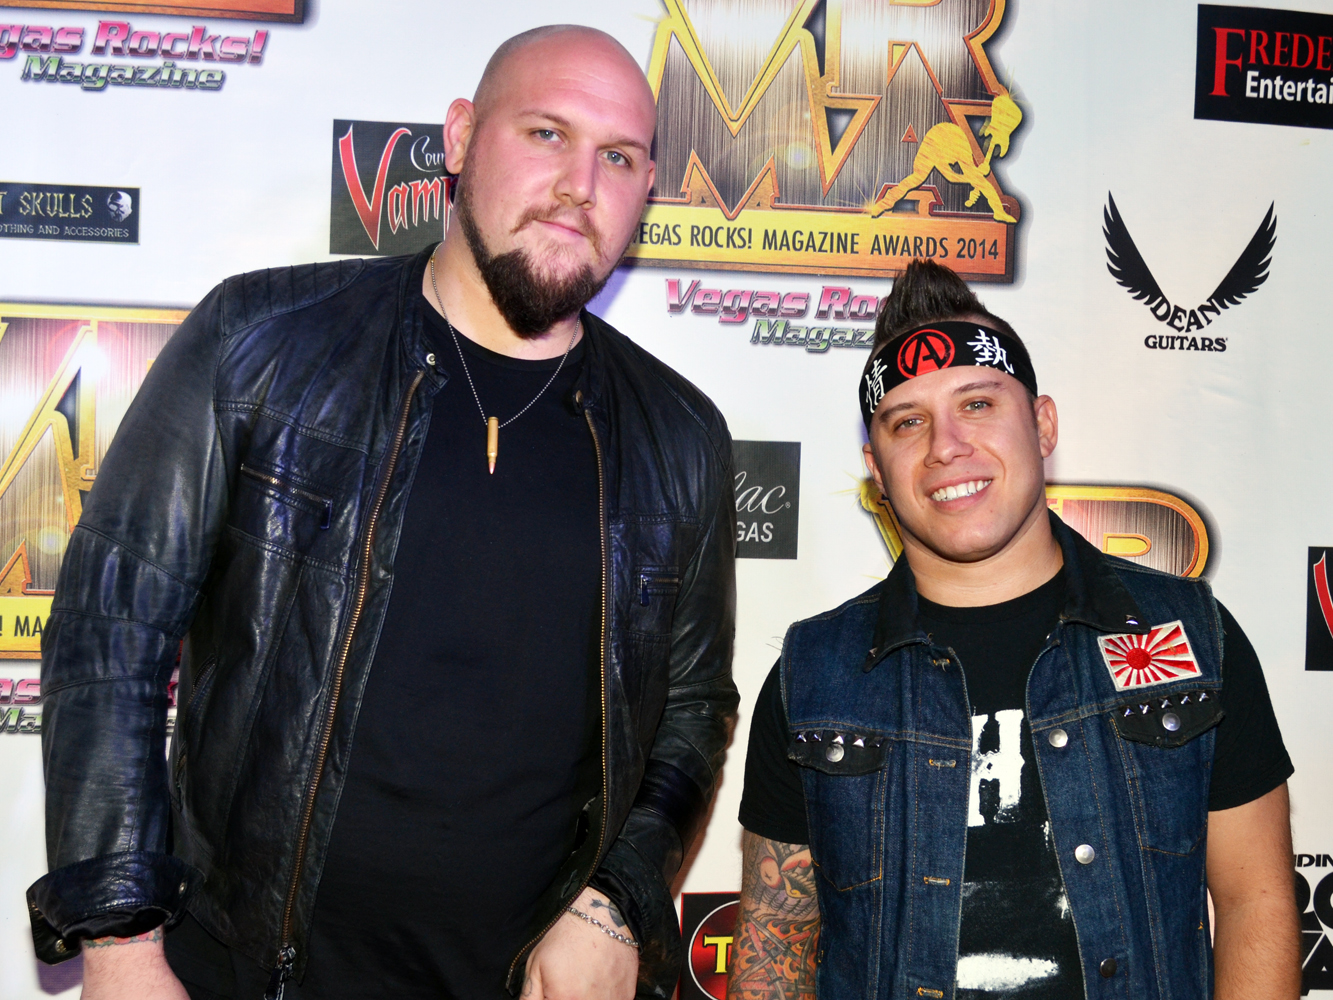 Brandon Saller and Dan Jacobs - Atreyu - Vegas Rocks Magazine Music Awards 2014 photo credit Stephen Thorburn 63517